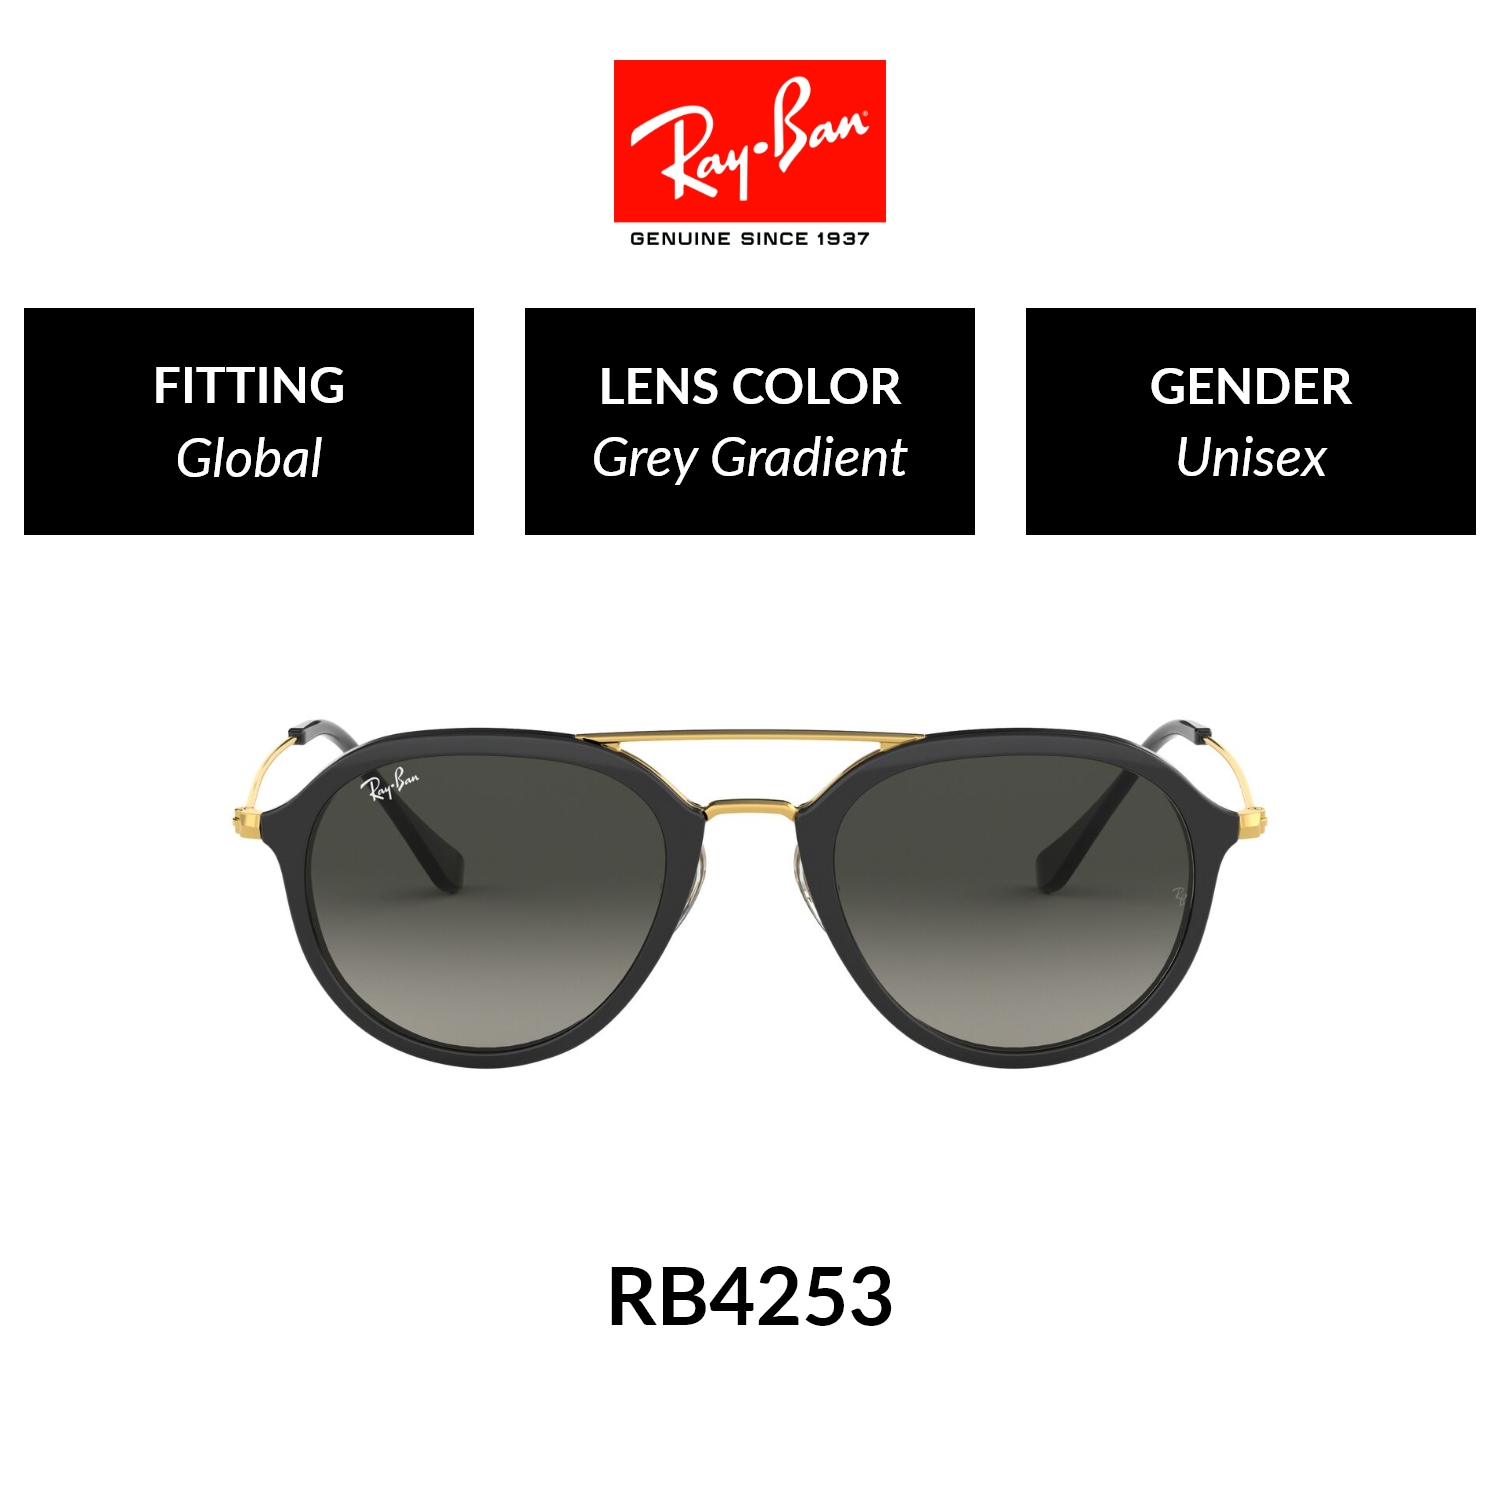 Ray Ban Phantos Rb4253 601 71 Unisex Global Fitting Sunglasses Size 53mm Lazada Singapore